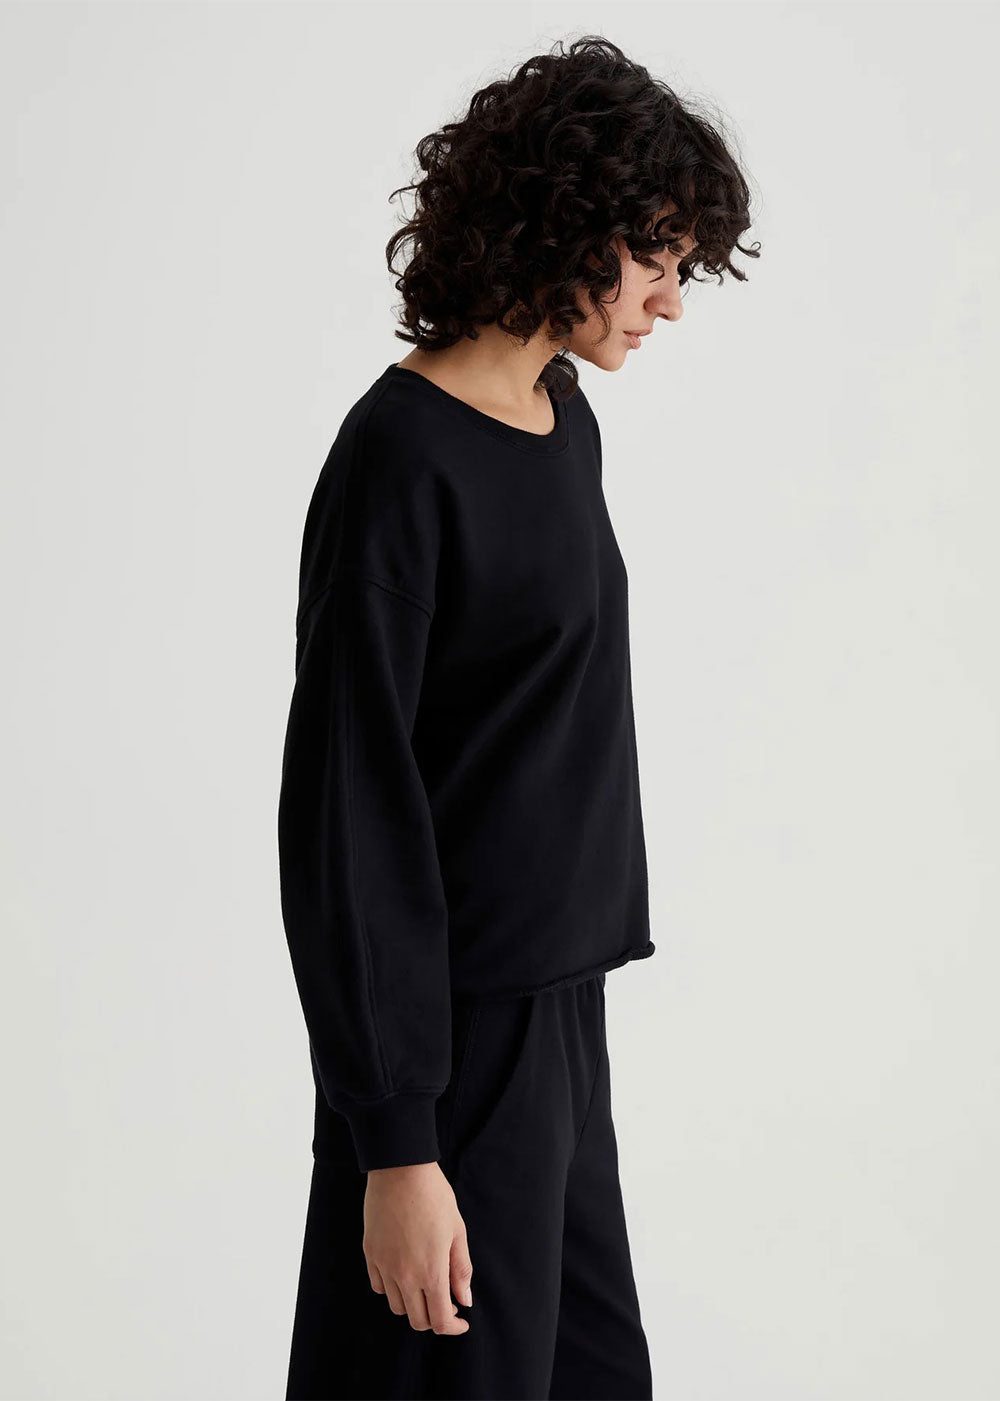 Willow Sweatshirt - True Black - AG Jeans - Danali - ELT71449TBC